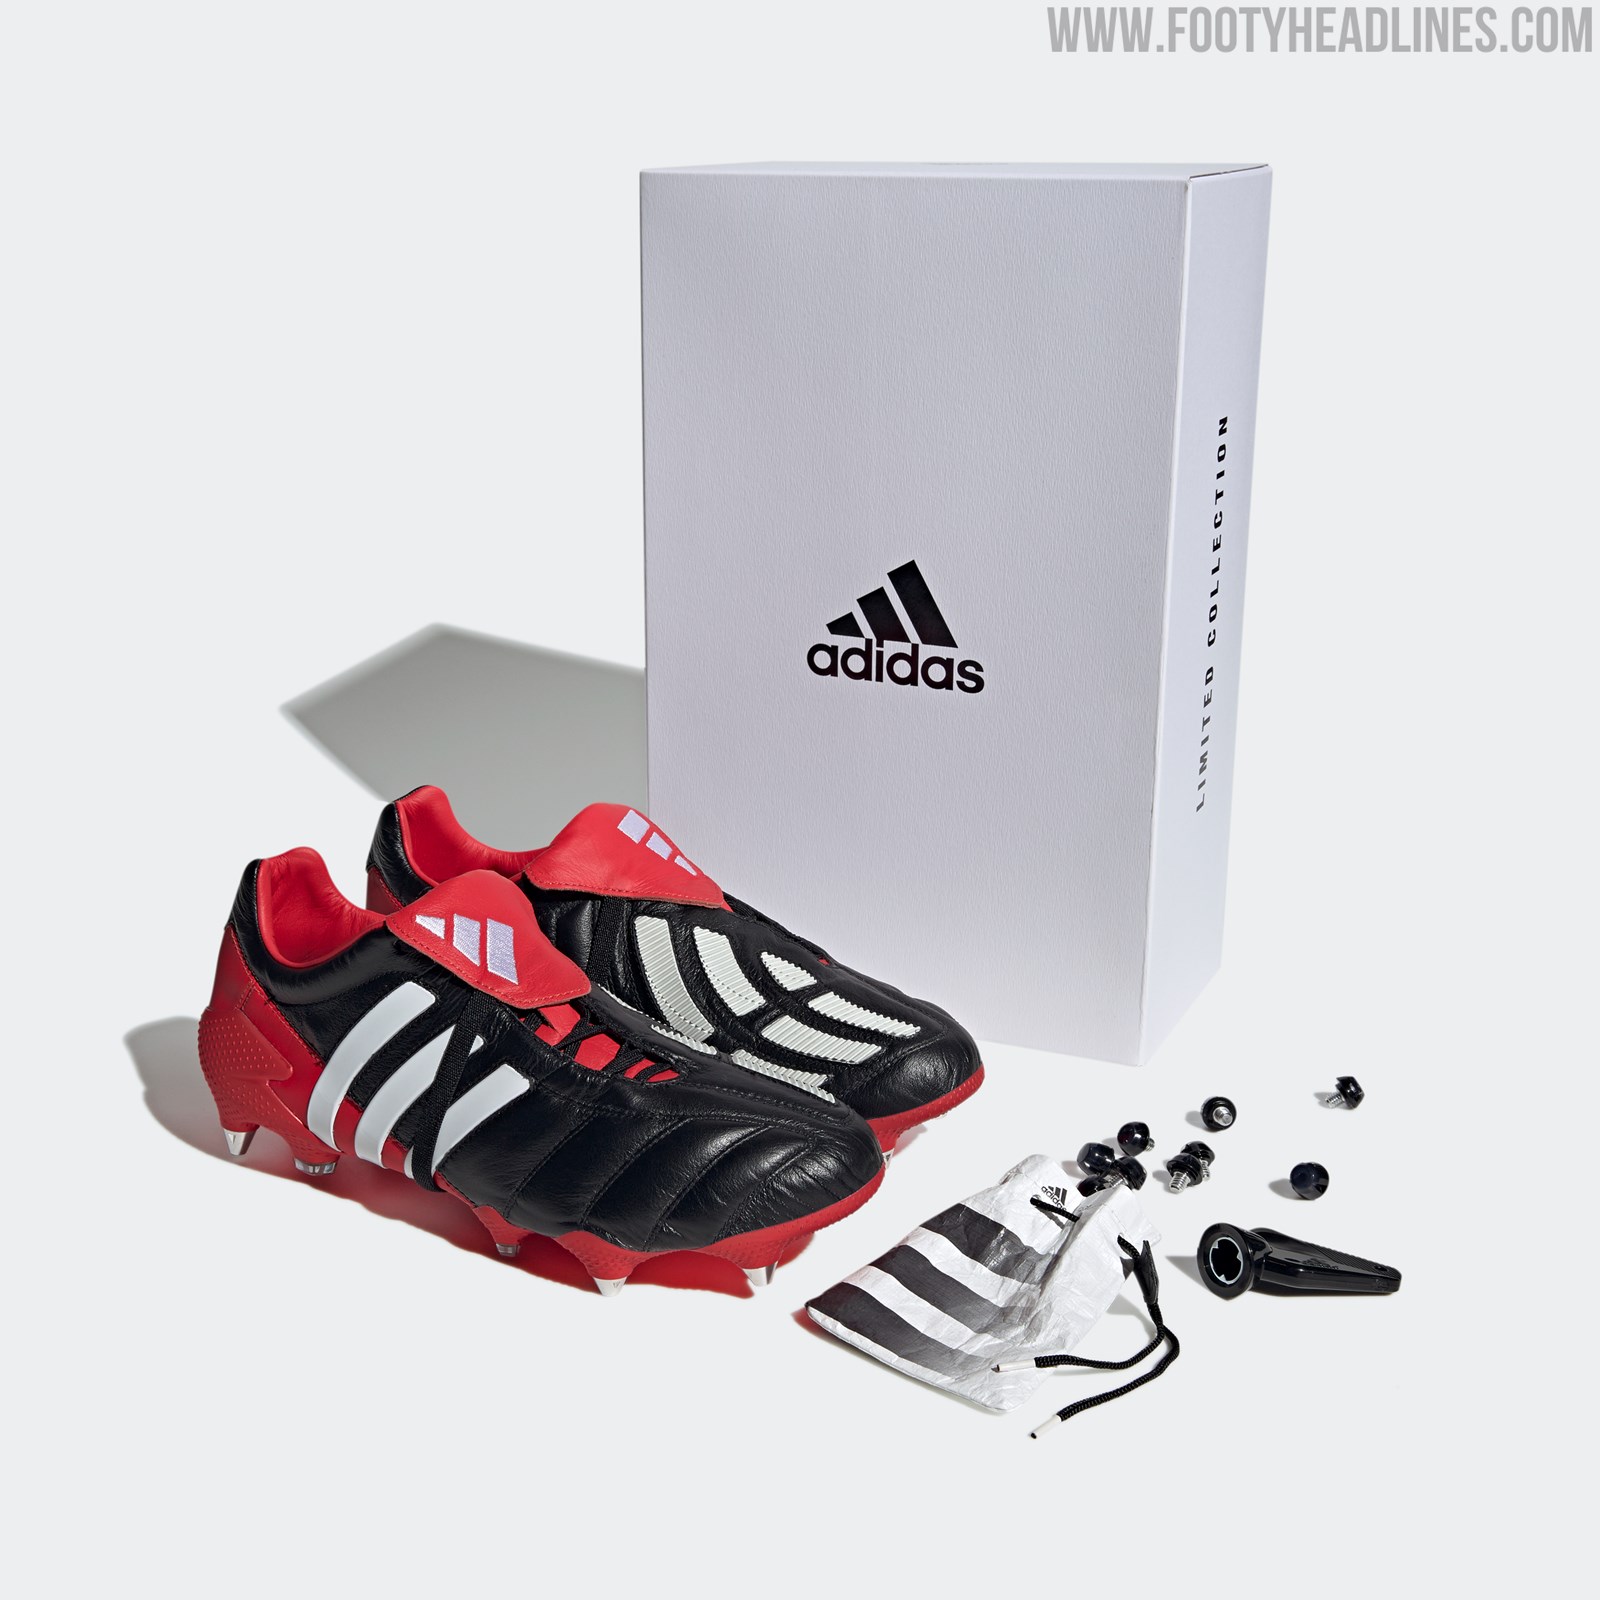 Adidas Predator Remake Boots Released - 2,002 Pairs - Footy Headlines